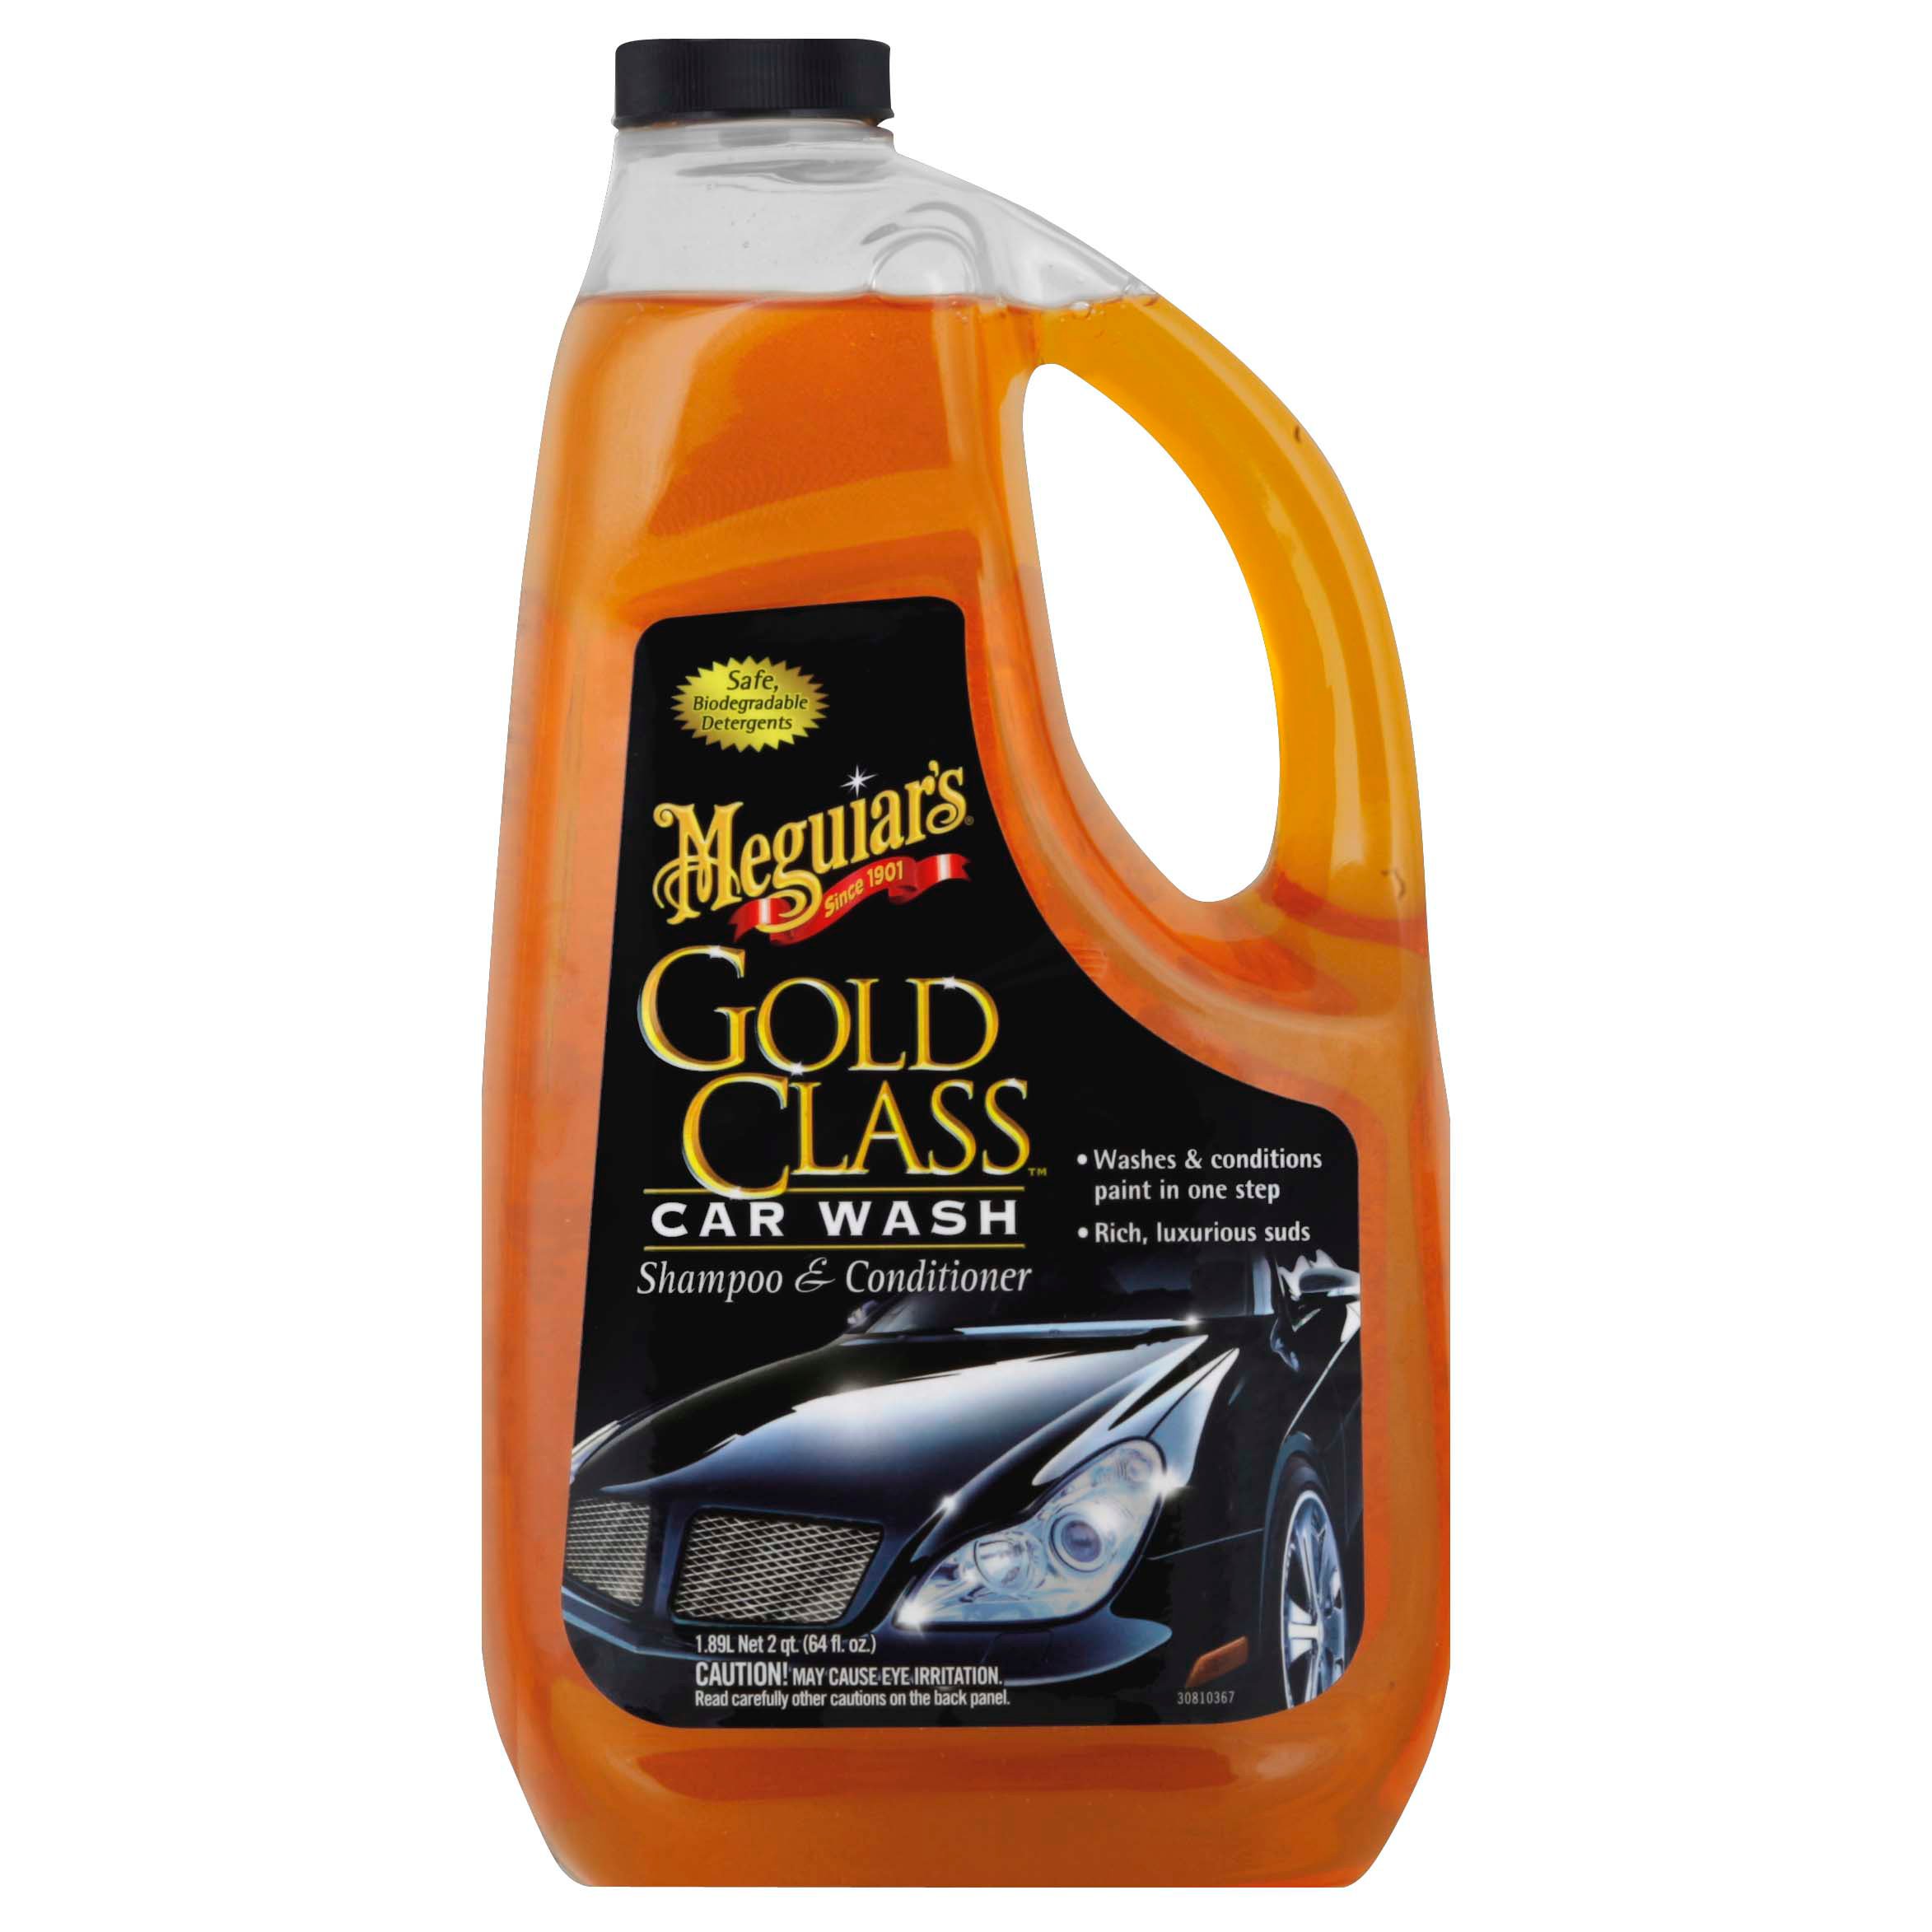 Meguiar's Gold Class Shampoo and Conditioner Car Wash